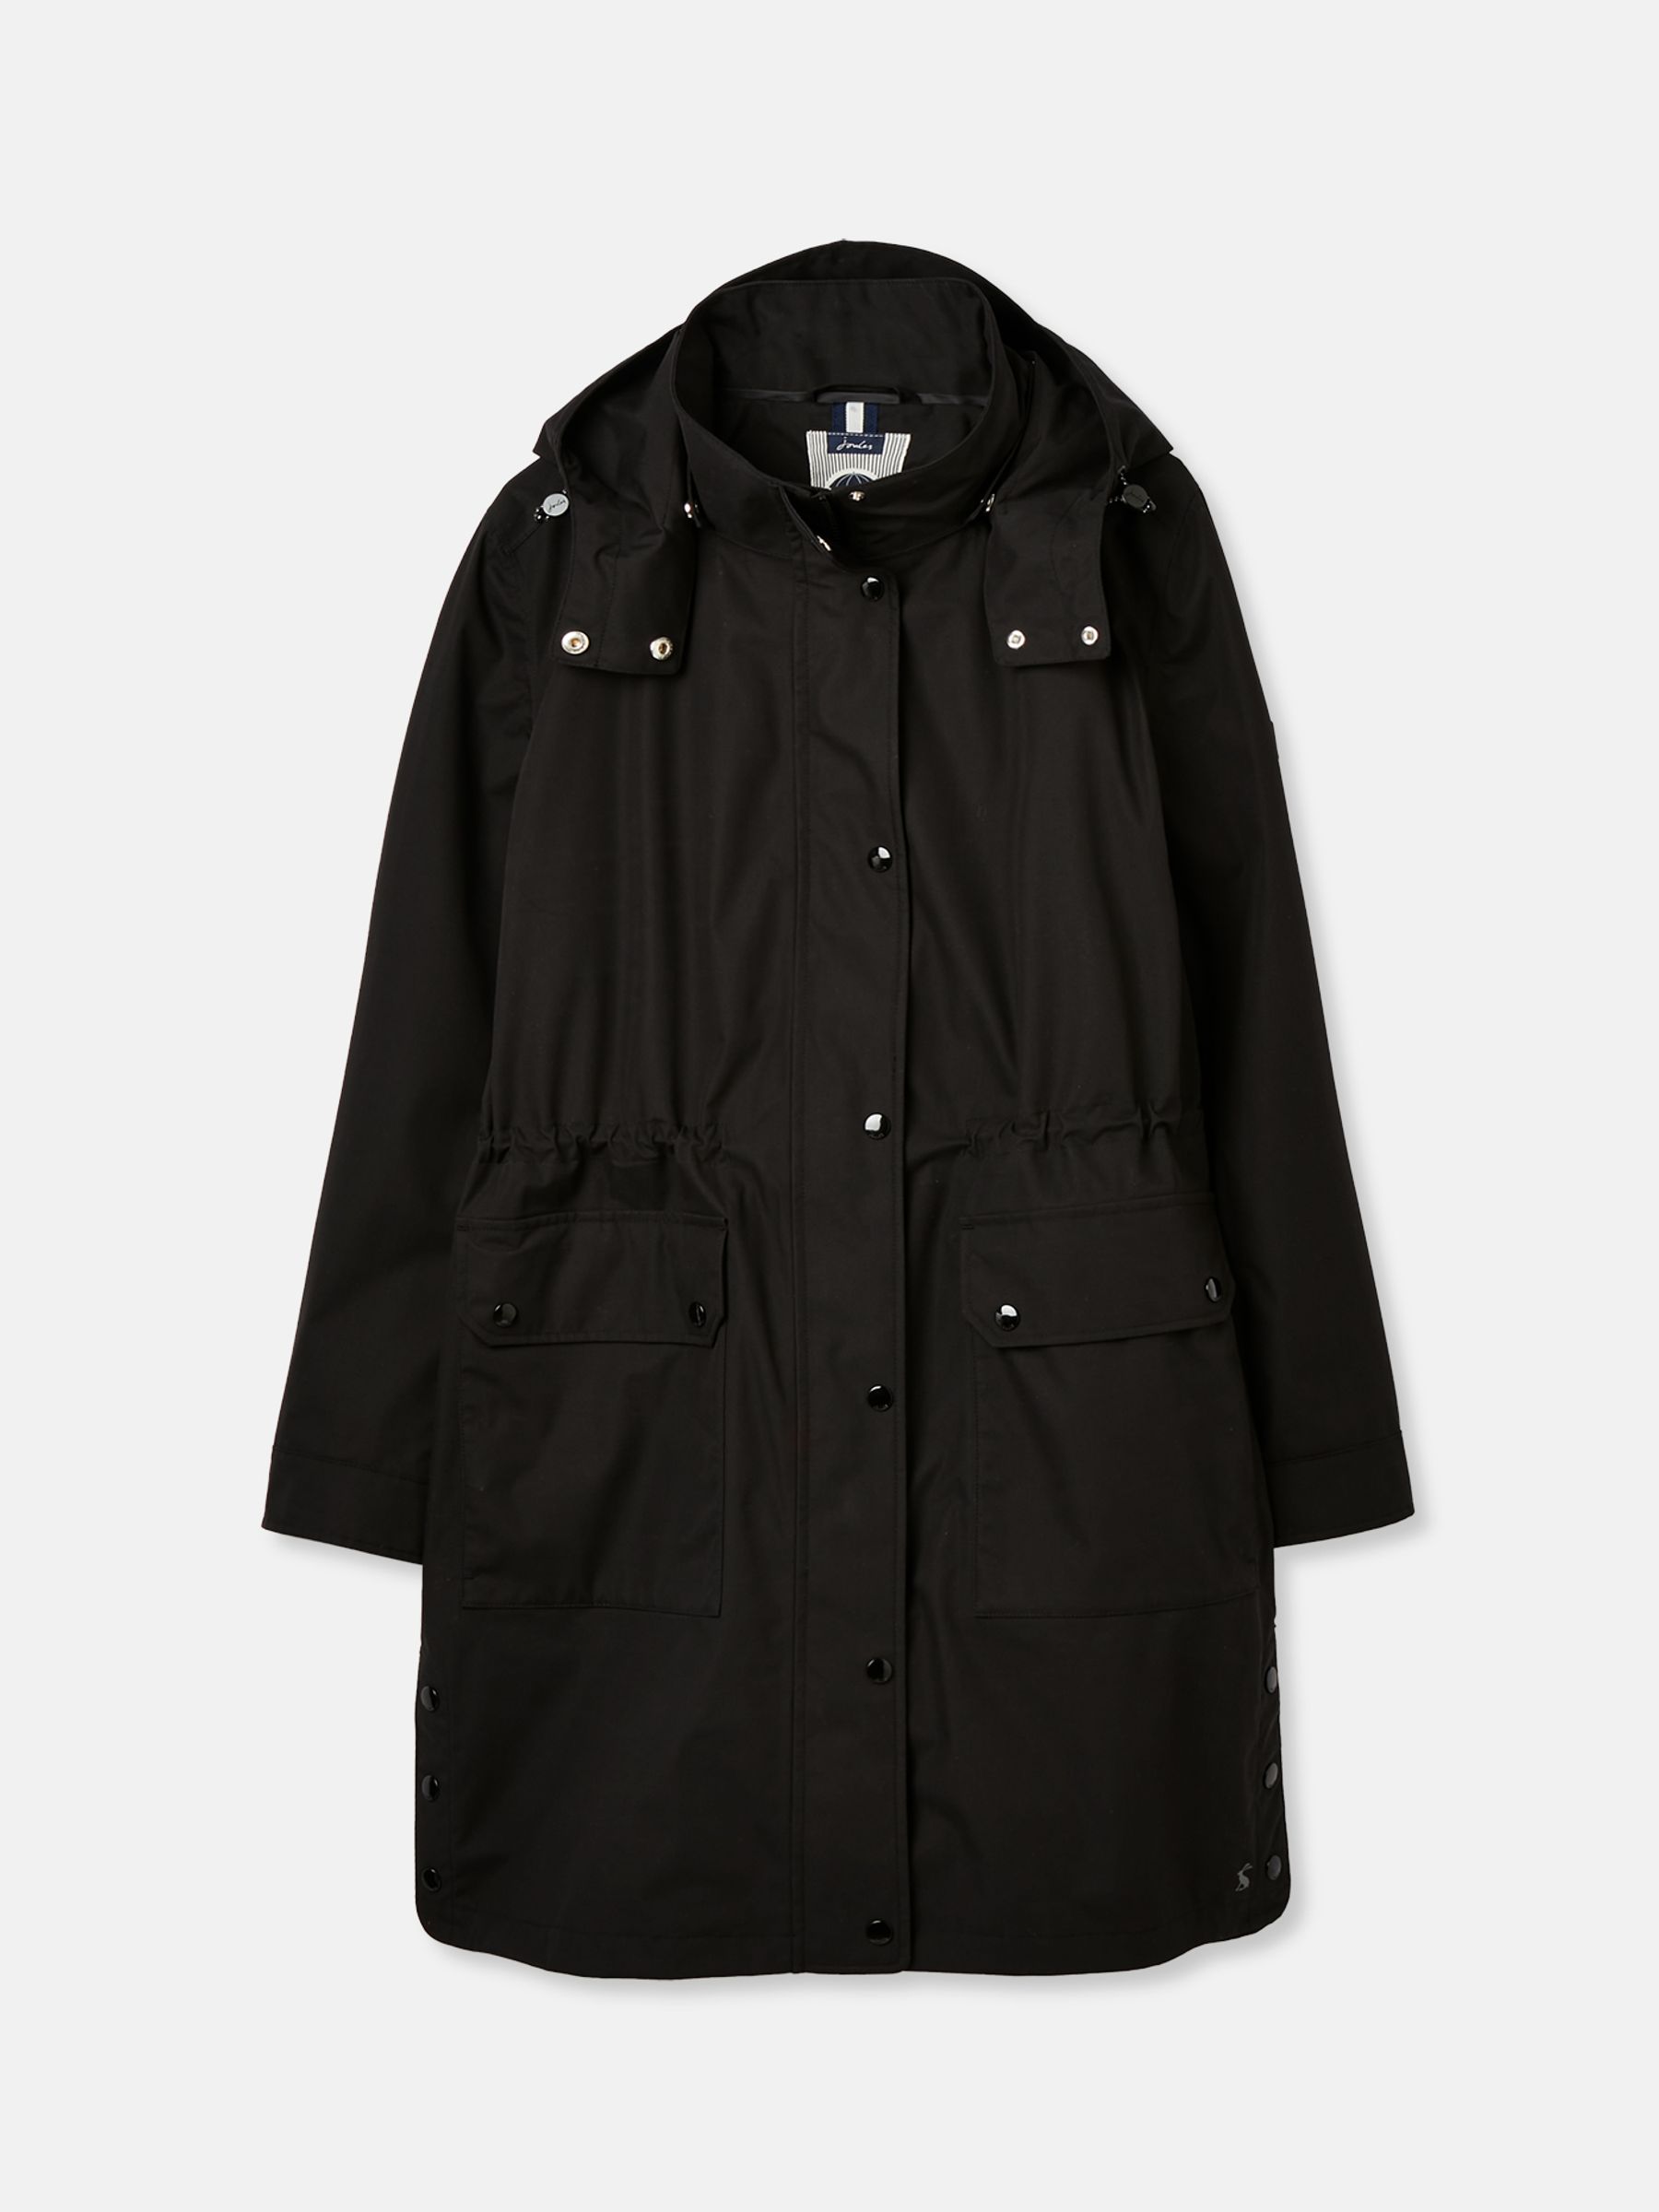 Buy Black Longline Waterproof Coat from the Joules online shop